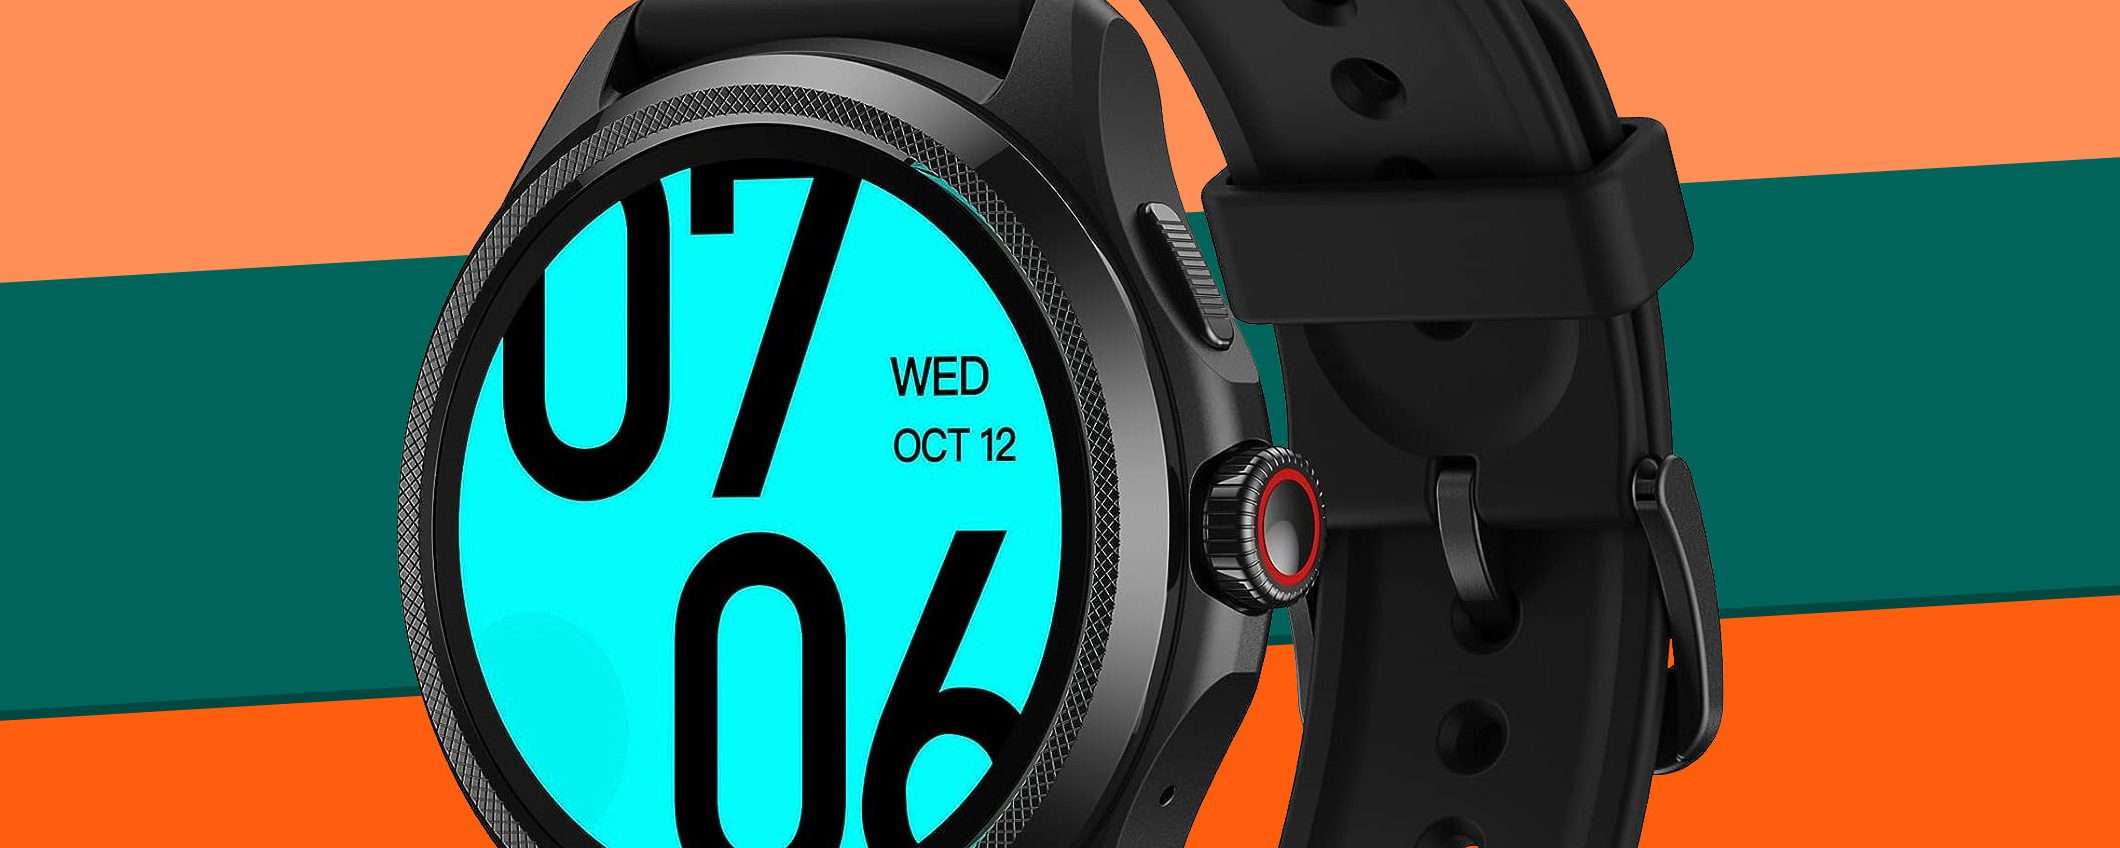 Black Friday: l'ottimo Ticwatch Pro 5 con Wear OS a -108€